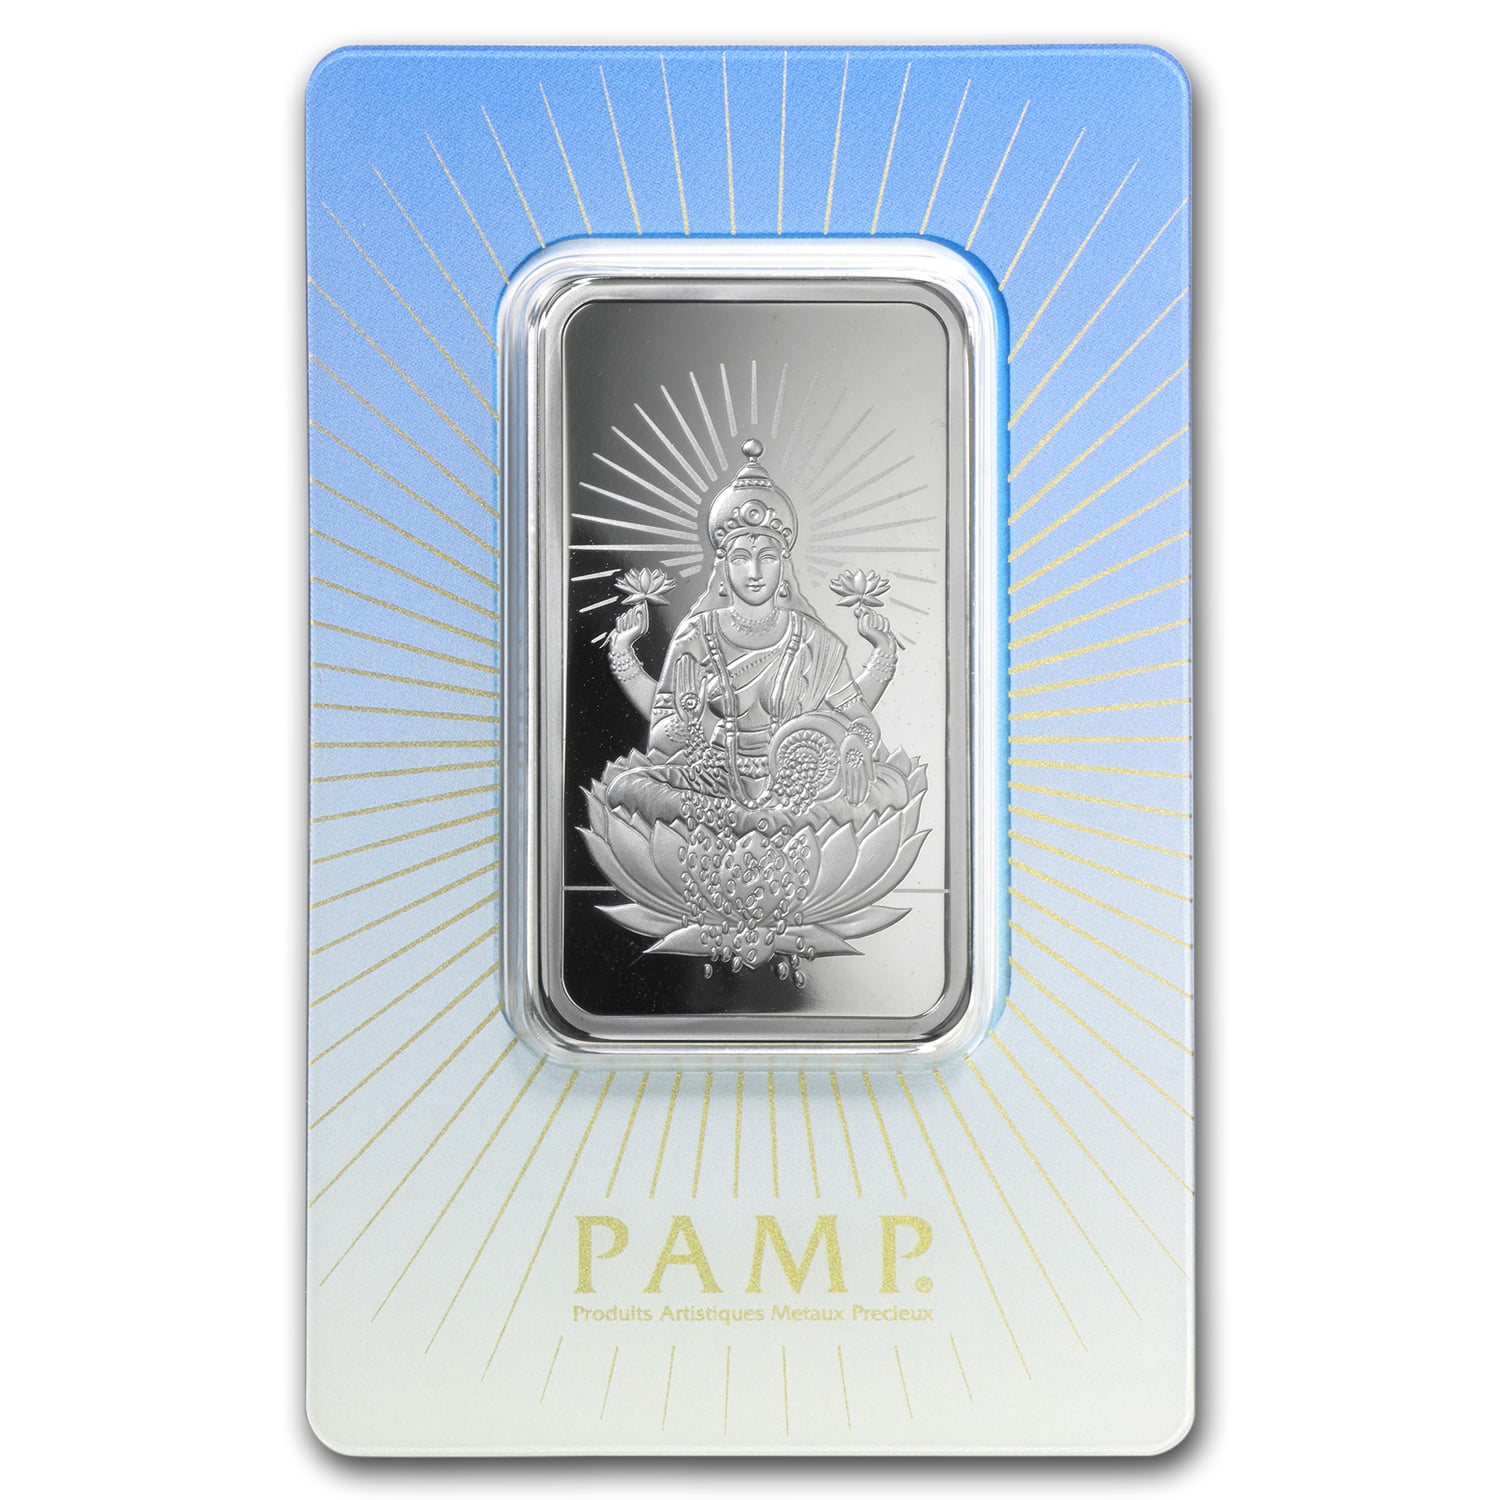 Lakshmi in Assay .999 Fine 1 oz PAMP Suisse Silver Bar 